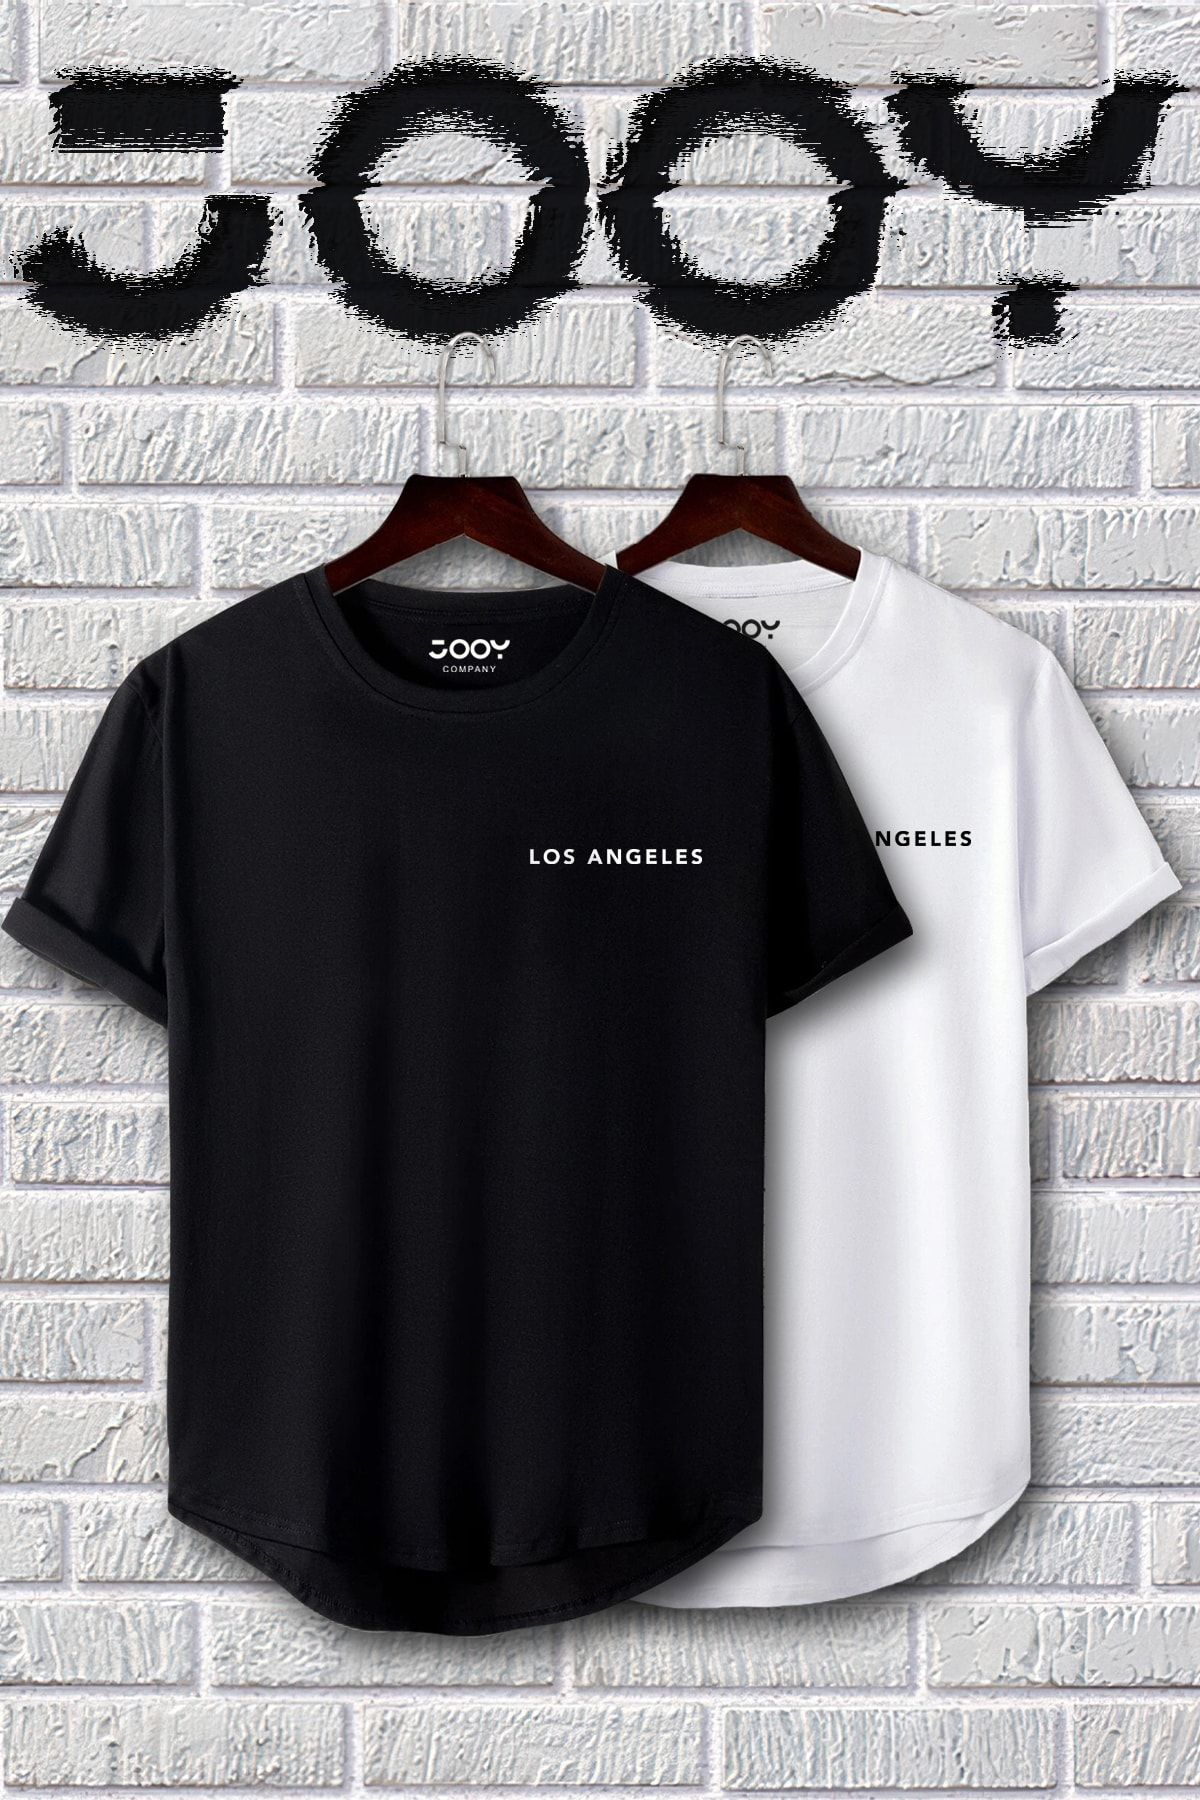 Jooy Company Siyah Beyaz Los Angeles Baskılı Slim Fit Tshirt Ikili Set